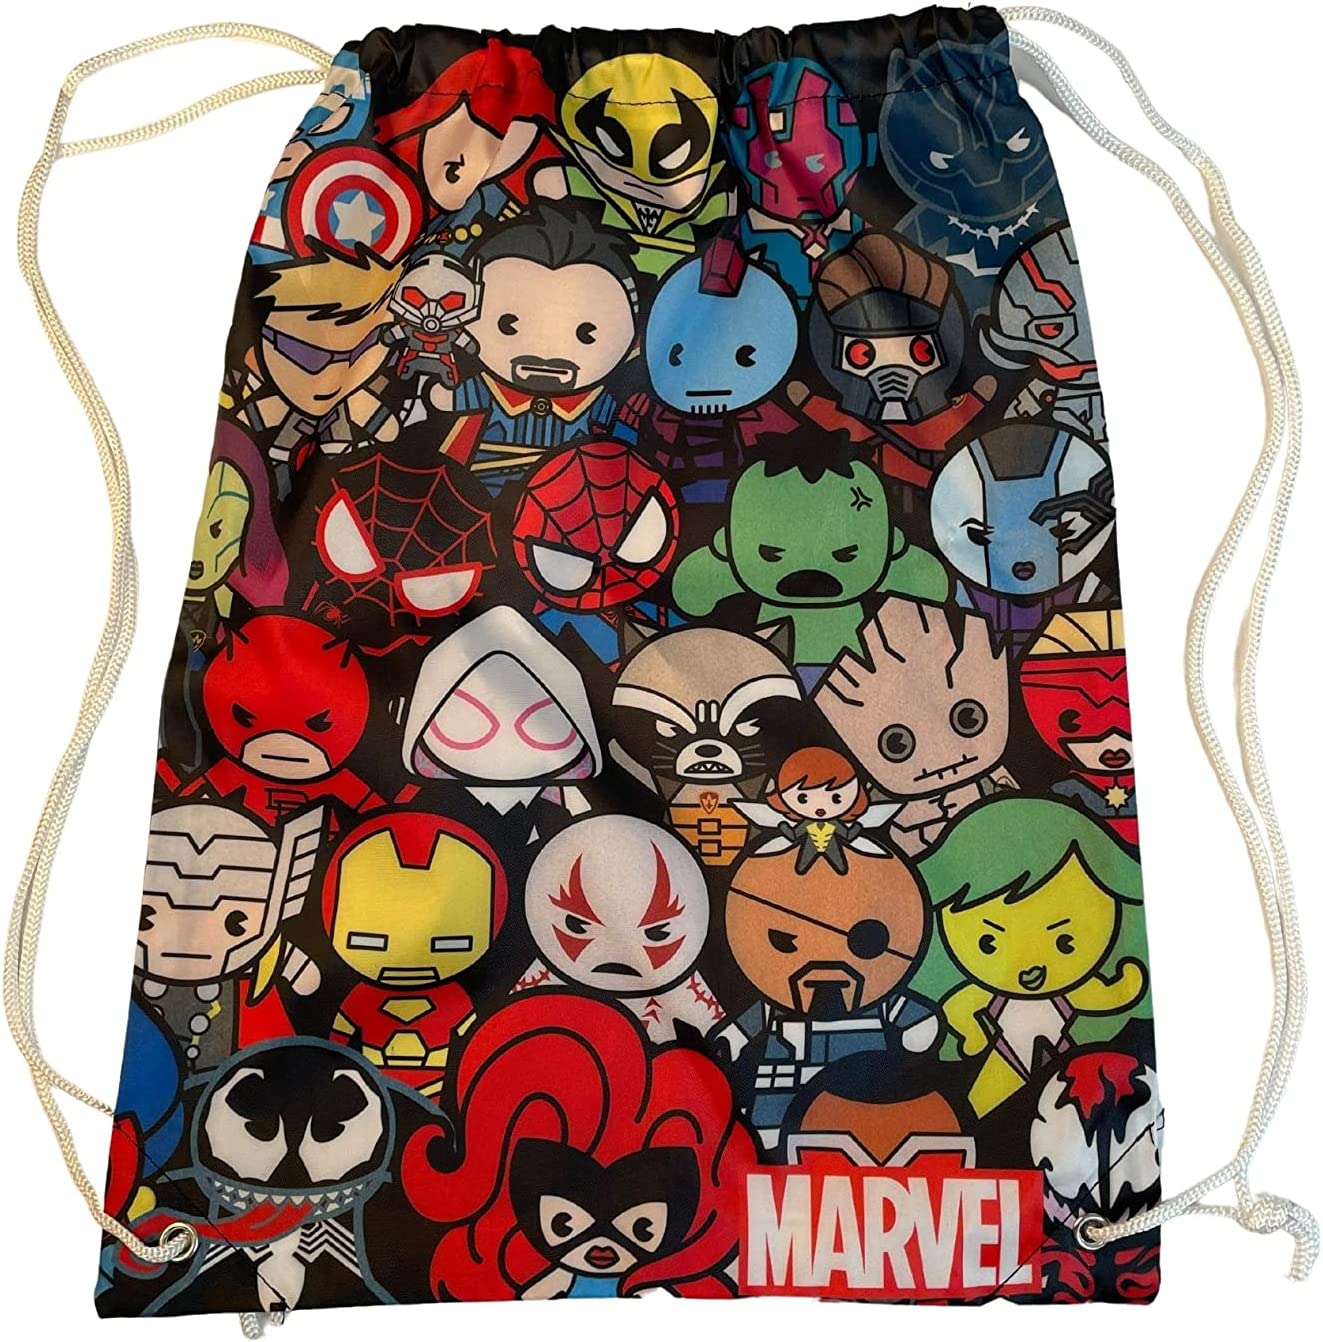 Disney, Star Wars, Marvel, DC Comics and More Cinch Sack Backpack 18-inch Sling Bags Drawstring Totes (Marvel Avengers)